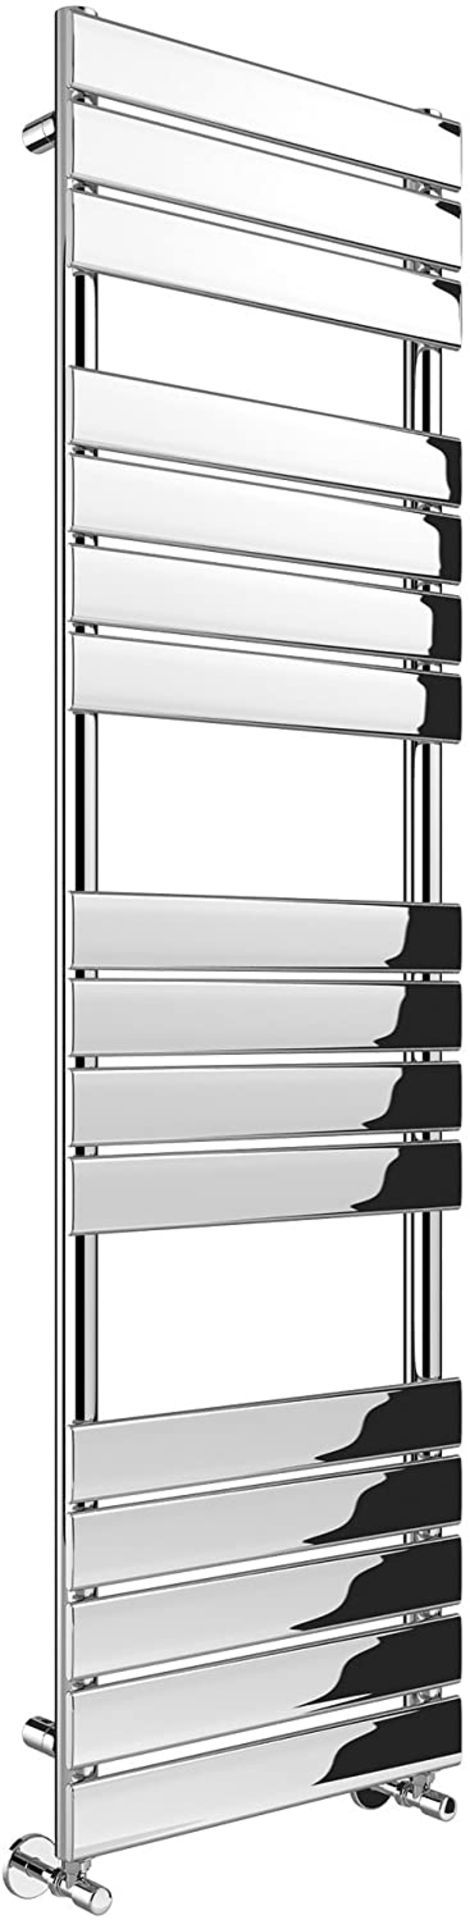 BRAND NEW BOXED 1600x450mm Chrome Straight Towel Radiator Ladder Modern Bathroom. RF1600450.C... - Image 3 of 3